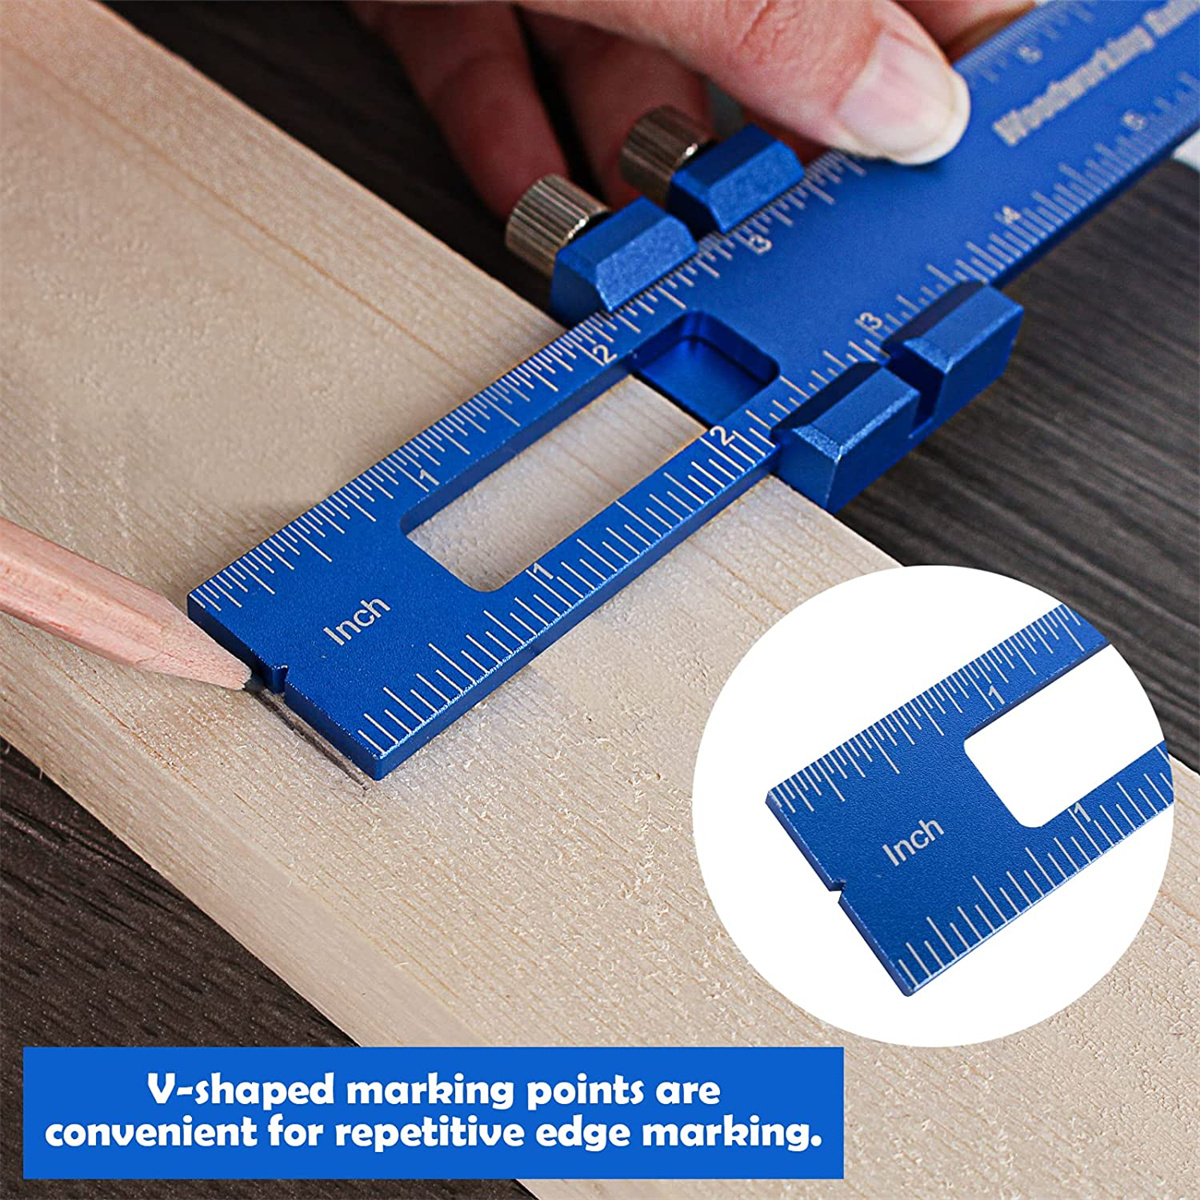 3PCS Woodworking Ruler-Aluminum Pocket Rulers with Slide Stop Woodworking T-Type Scribing Rule Marking Measuring Ruler Slide Square Rule for Engineers